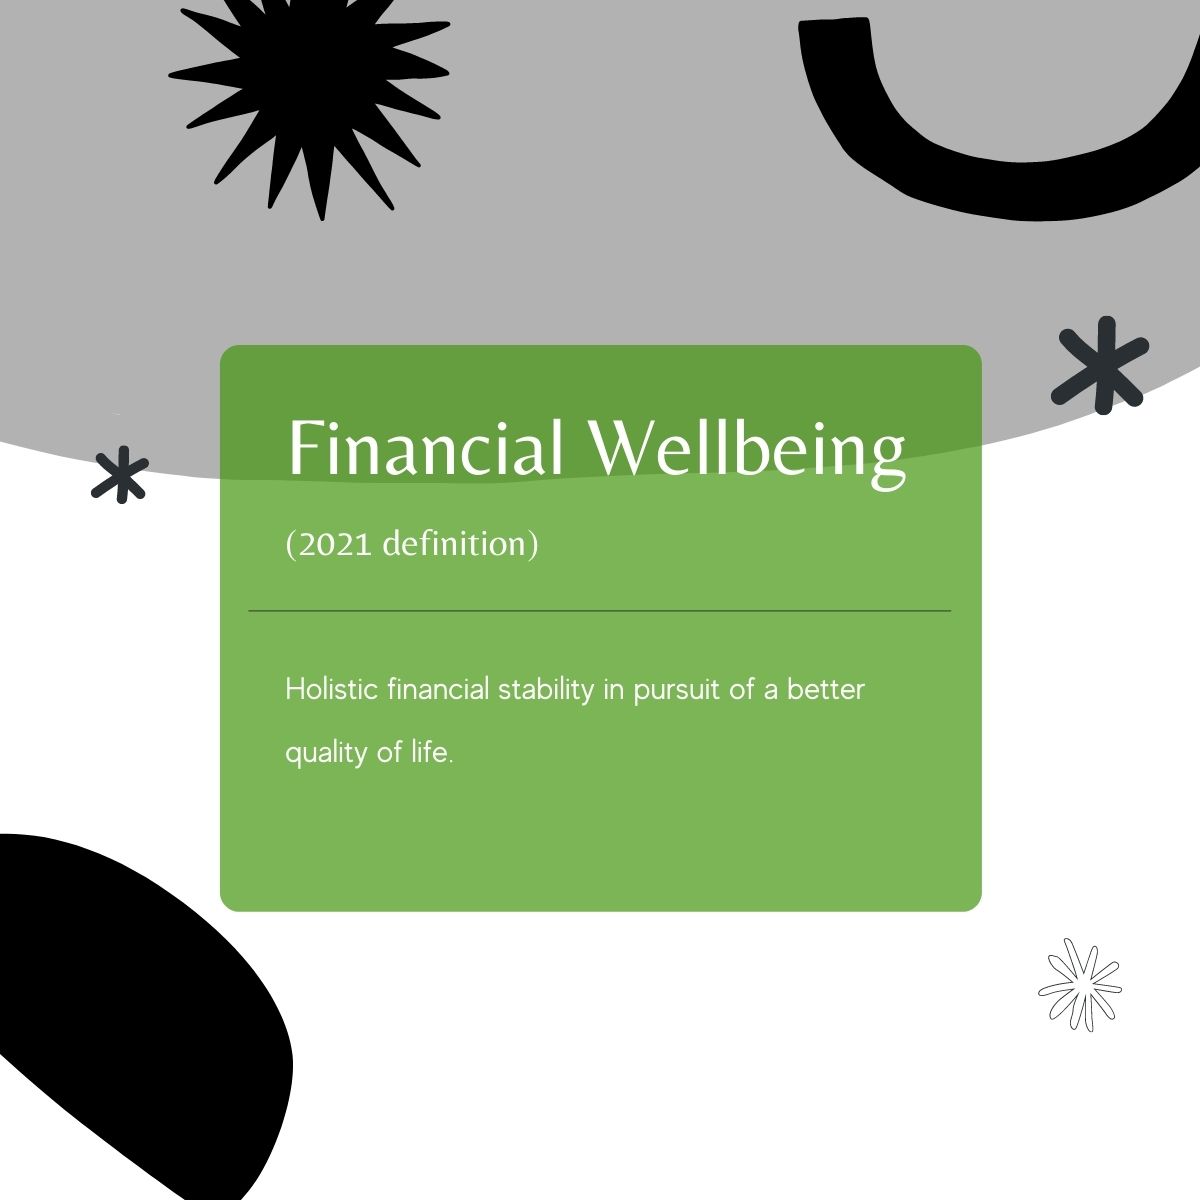 Financial wellbeing in 2021